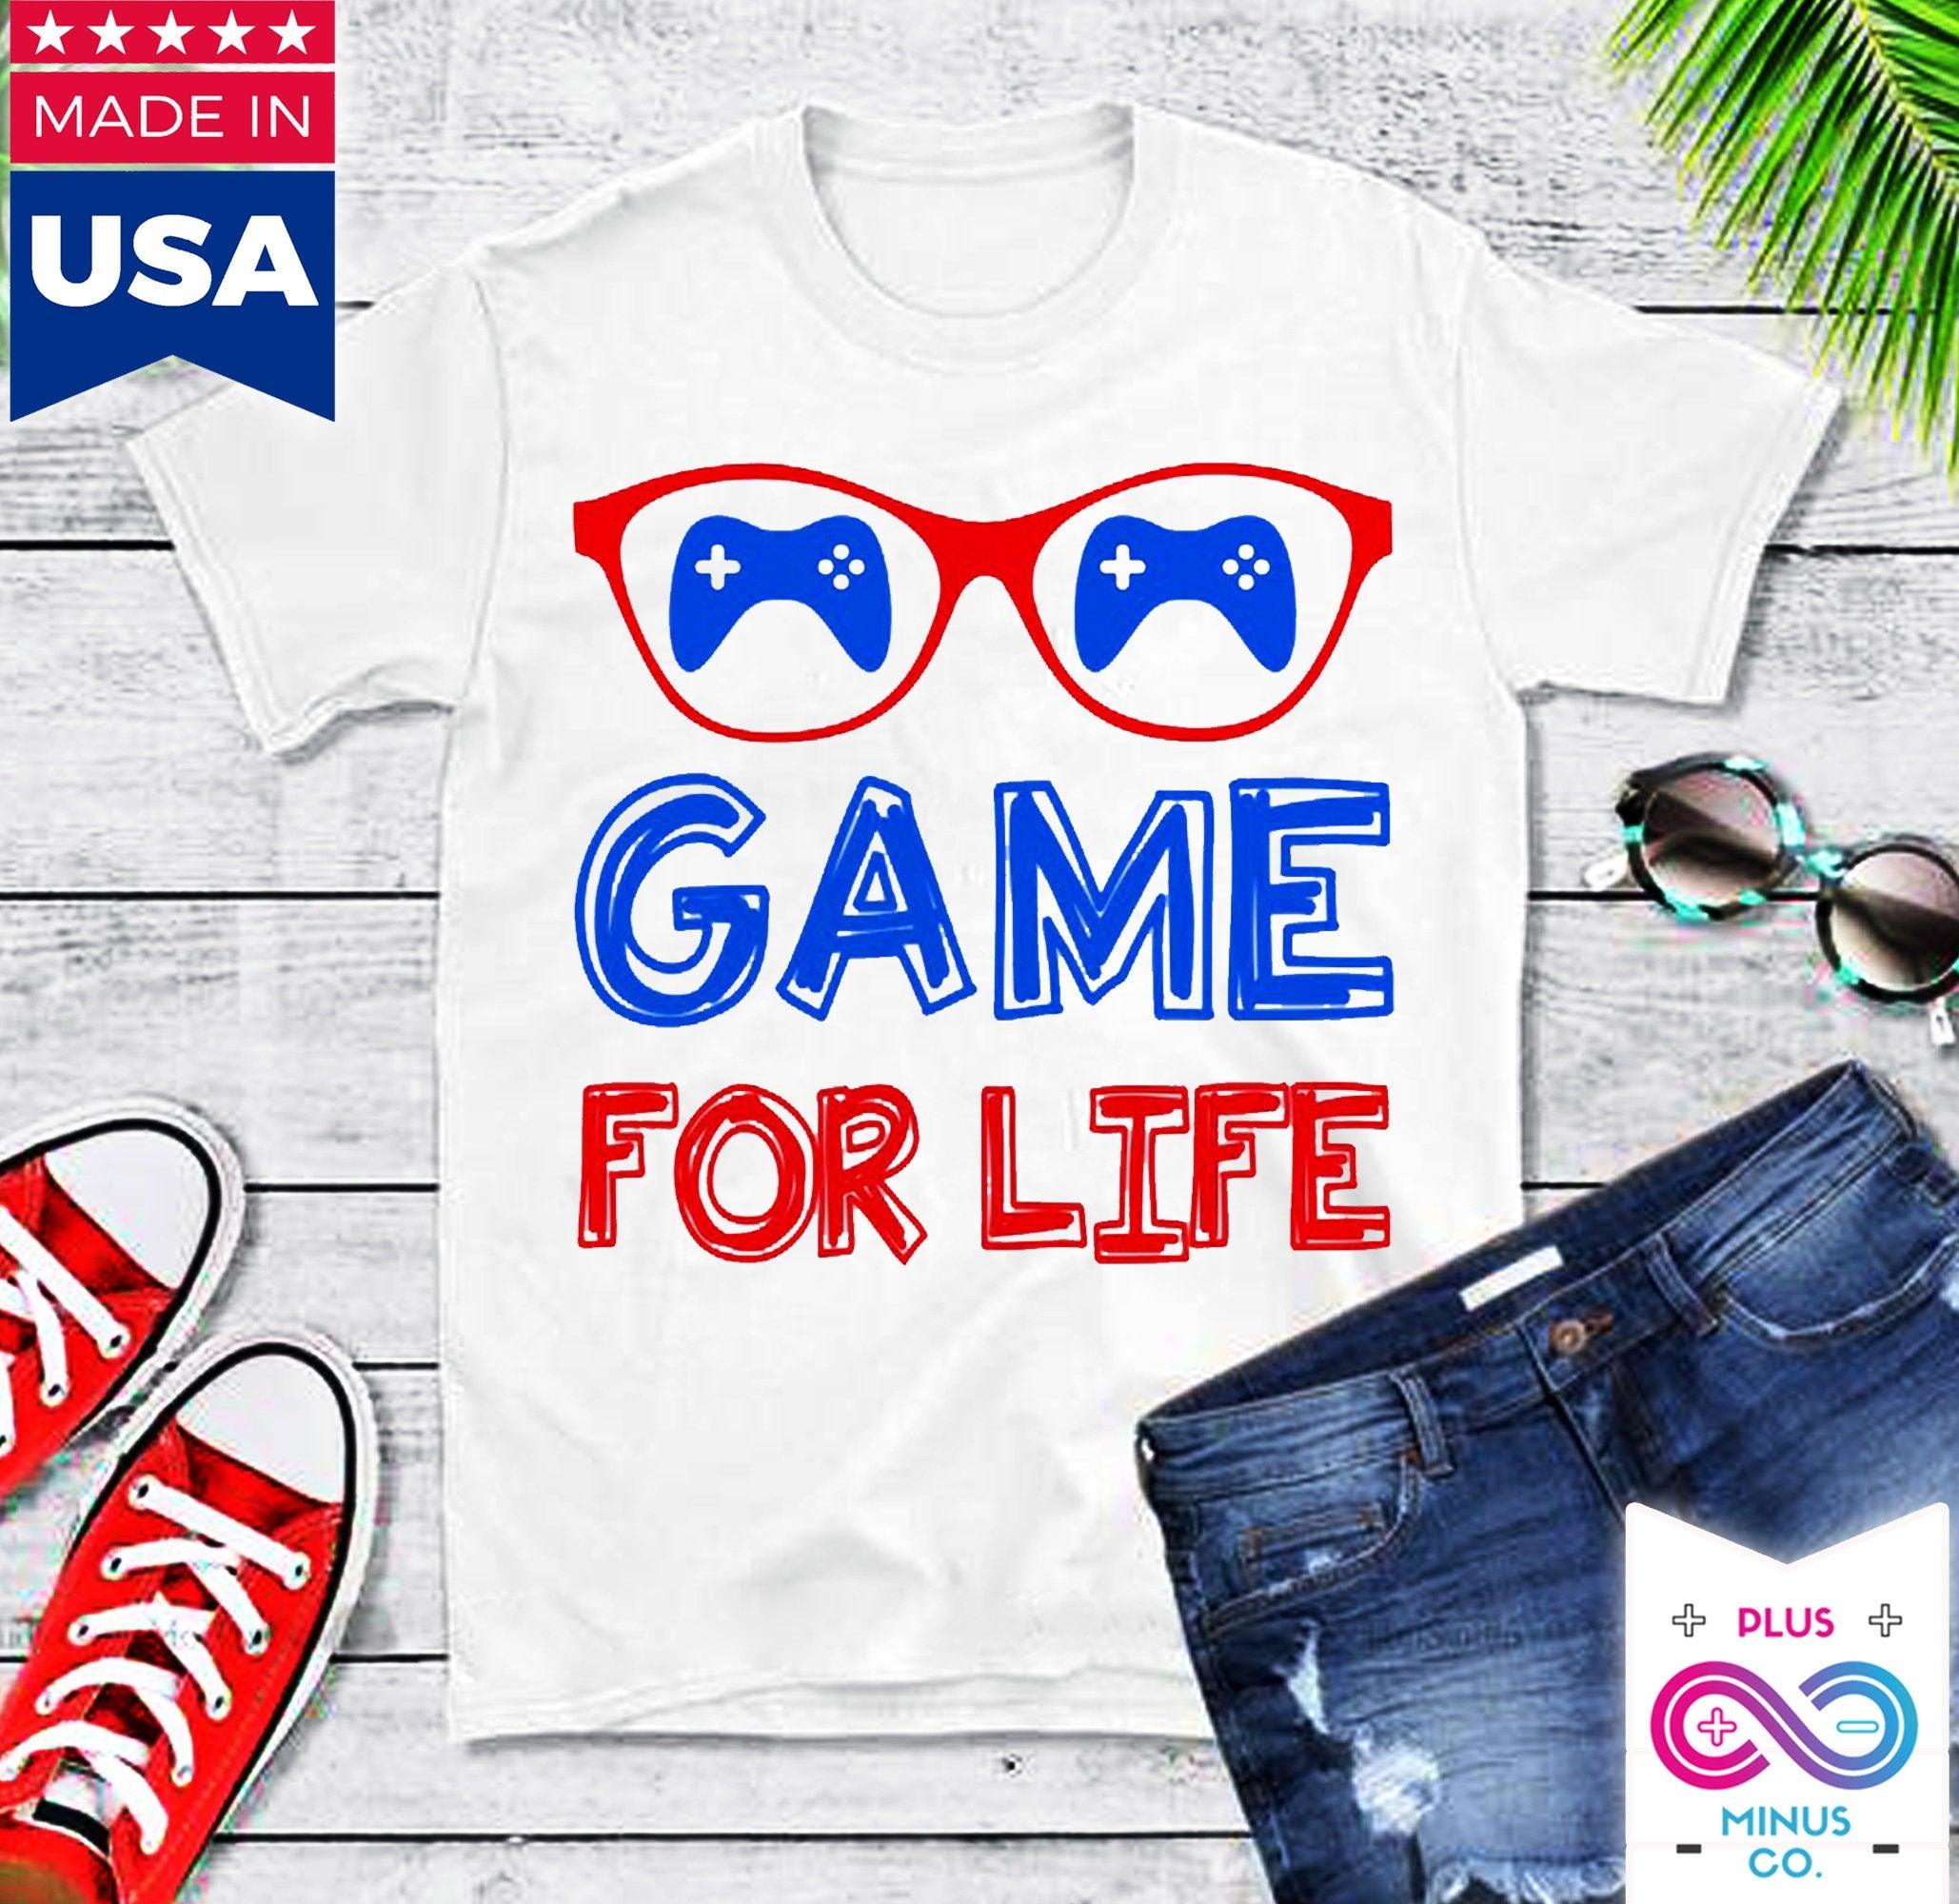 Spel voor het leven T-shirts || Gamer-shirt || Gamingshirt || Game Life-shirt || Gamercadeau || Videogame-shirt || Cadeau voor vriend - plusminusco.com